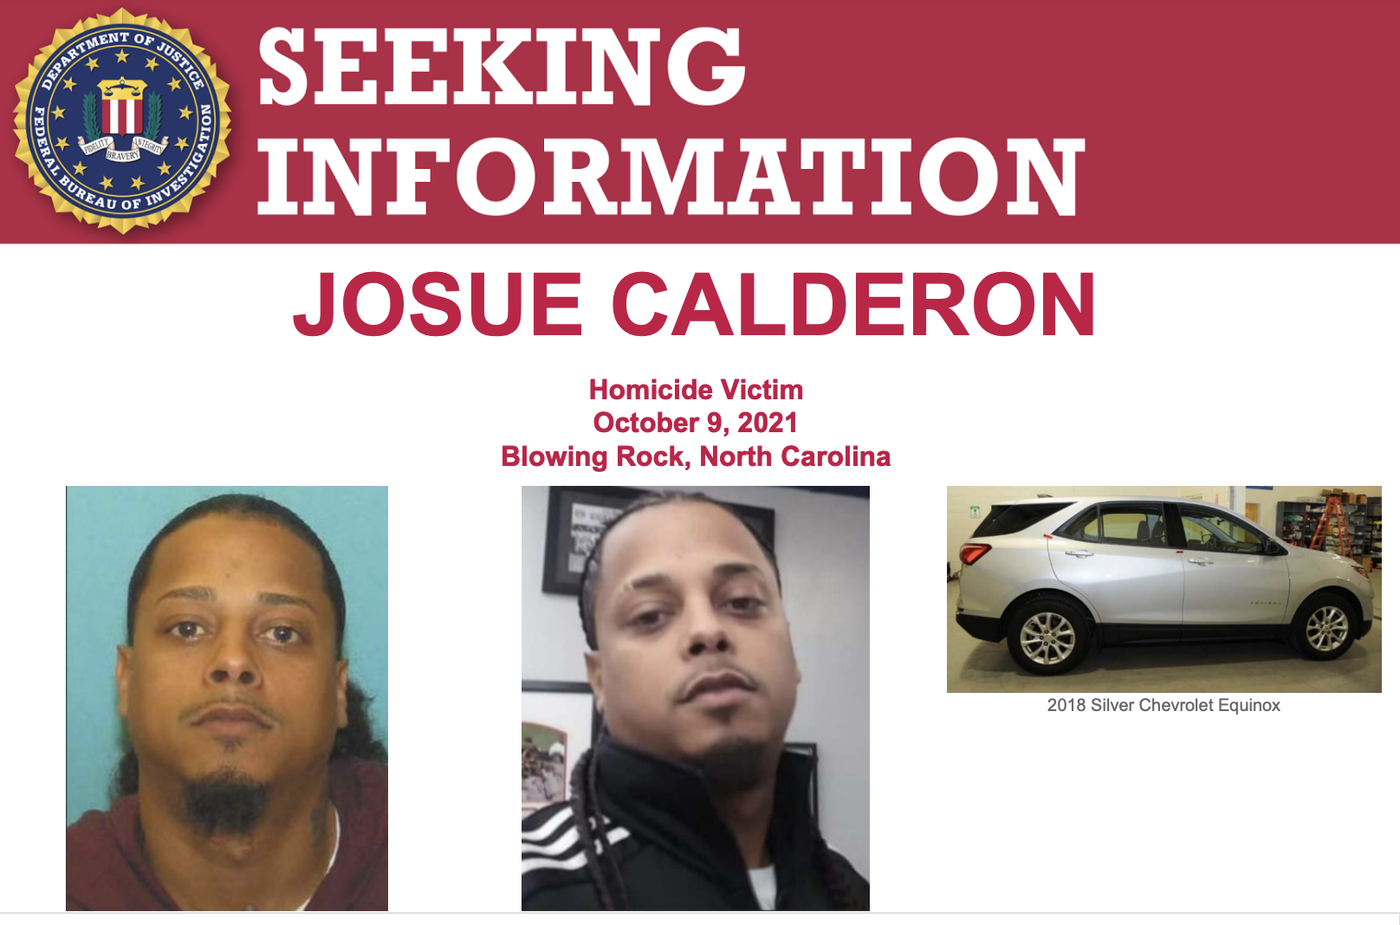 FBI seeking information posting regarding the homicide of Josue Calderon. Photo shows pictures of Calderon and a Chevrolet Equinox car.